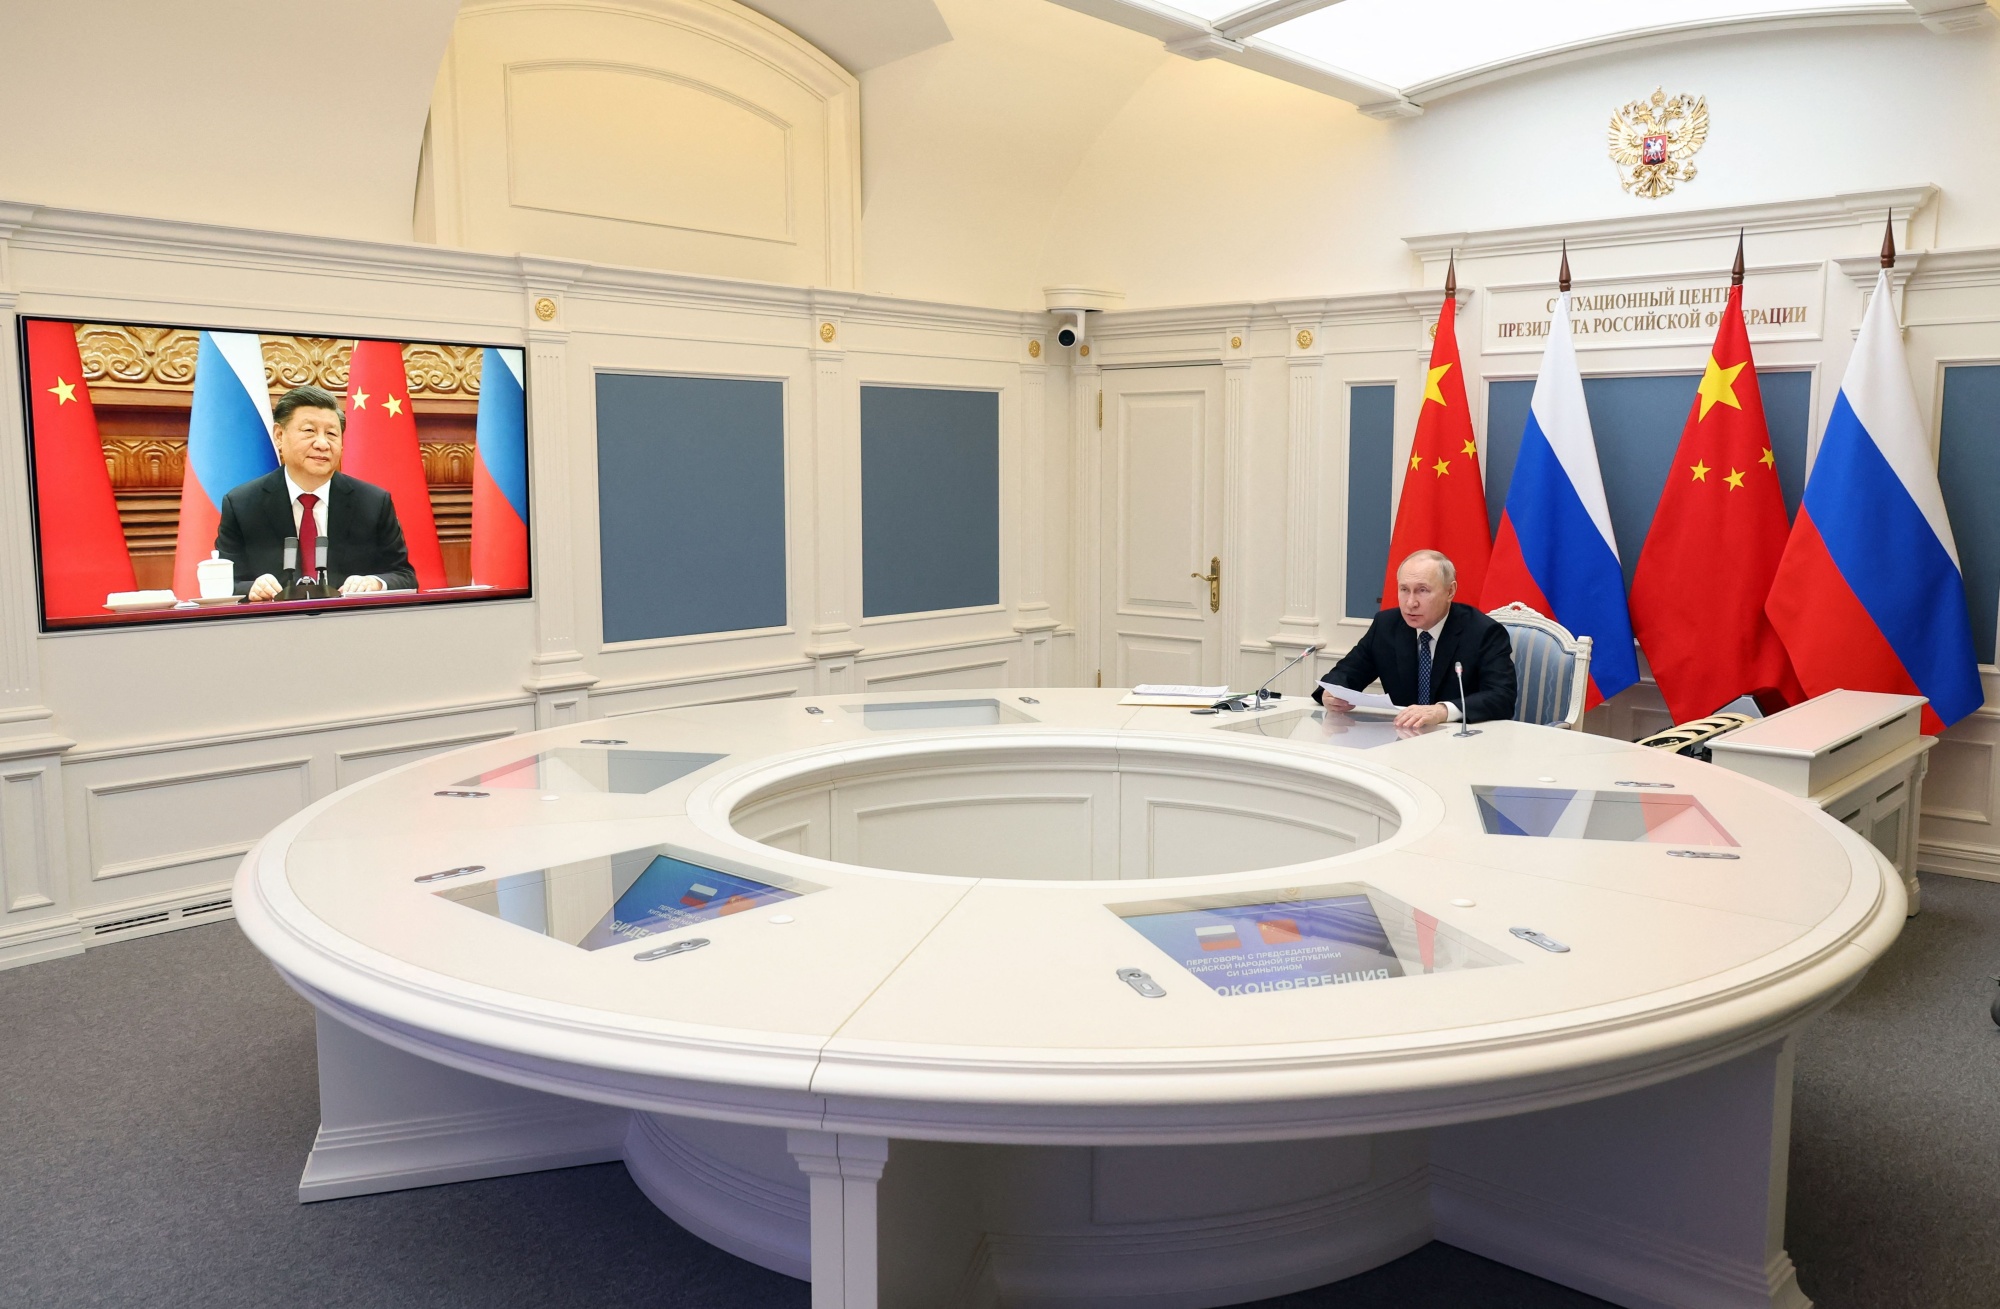 Vladimir Putin, right, speaks with Xi Jinping via video link on Dec. 30.